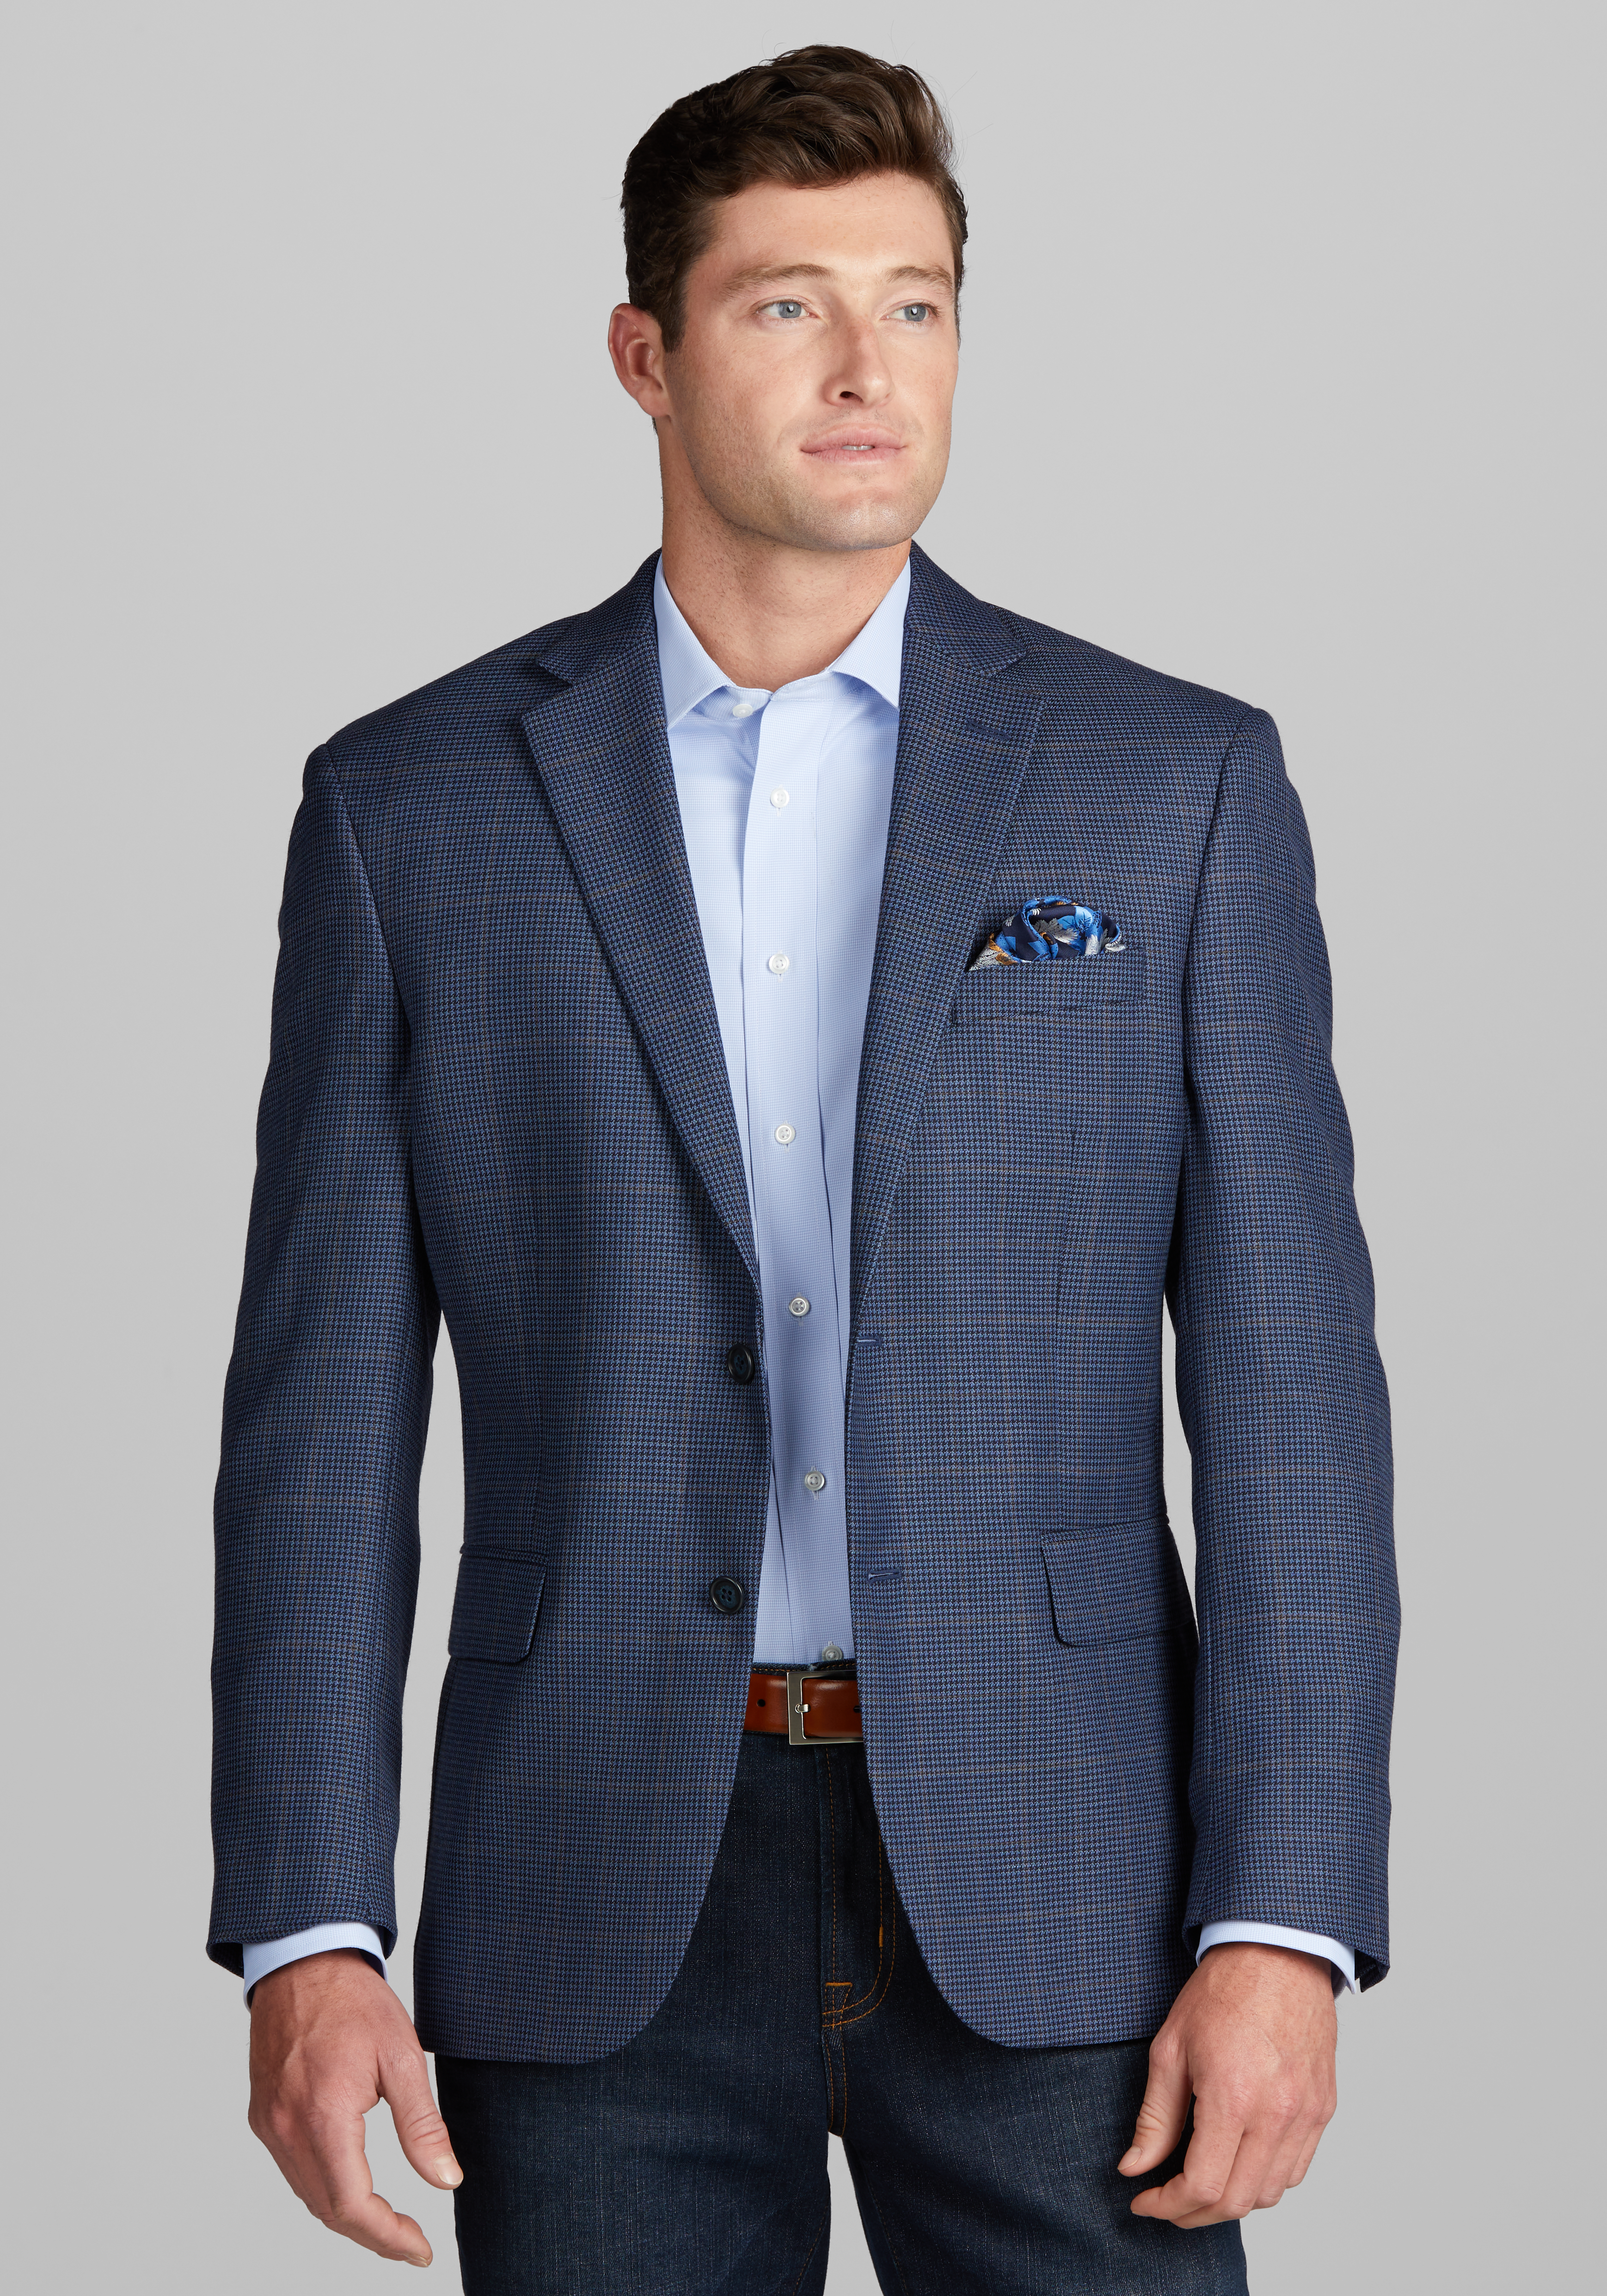 Big & Tall Suits & Clothing | Men's Big & Tall Store | JoS. A. Bank